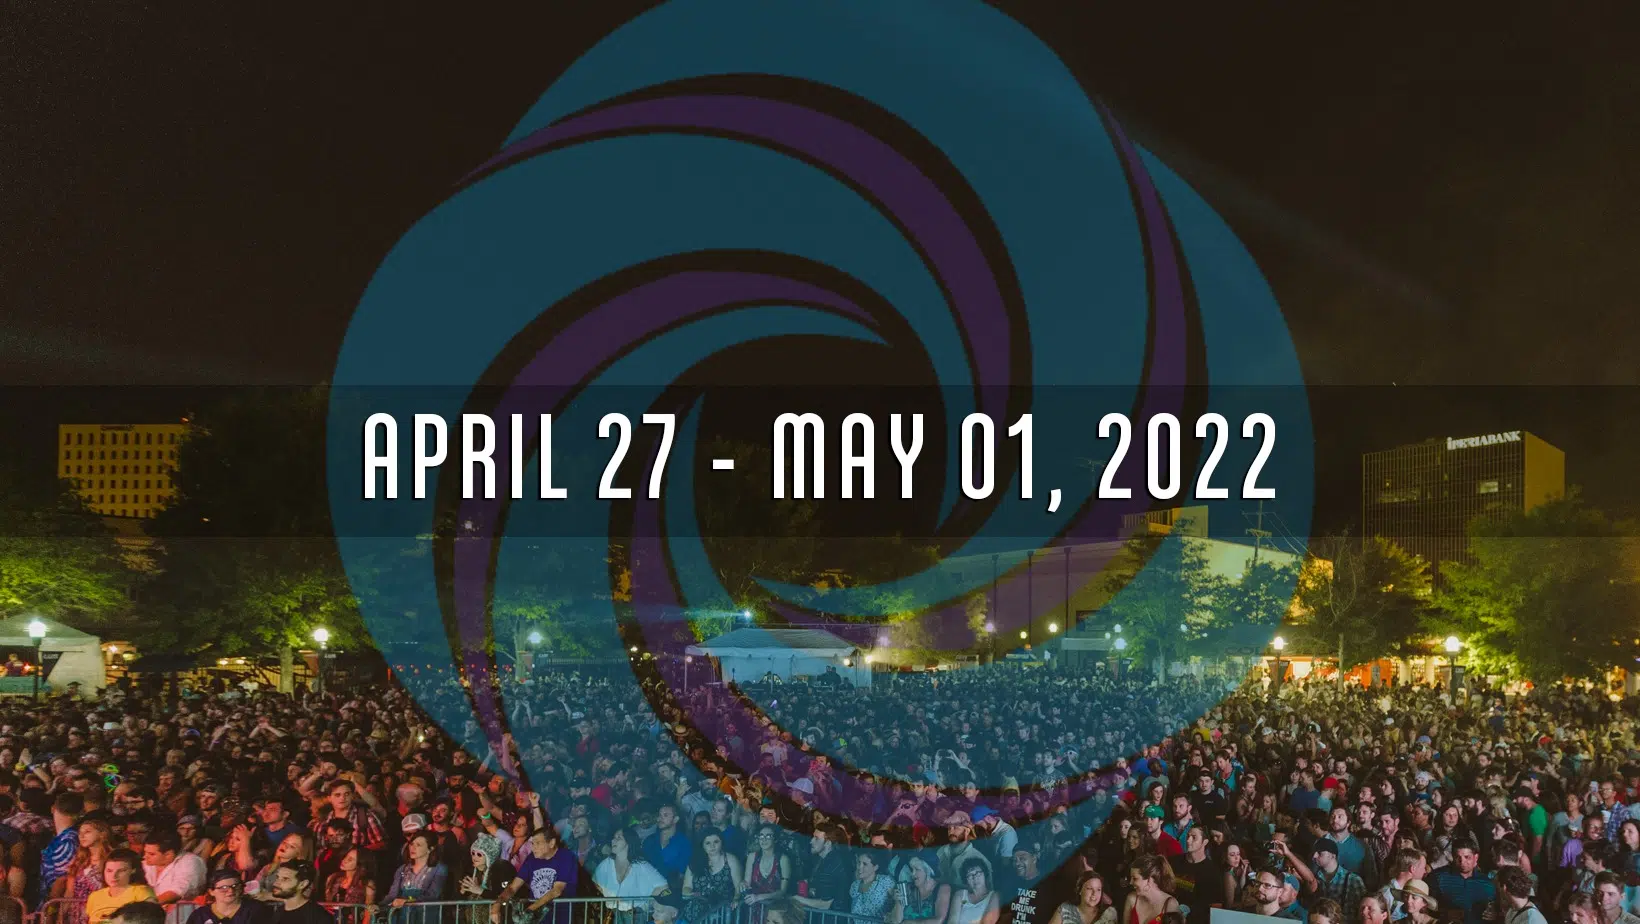 Organizers anticipate record-breaking attendance for Festival International 2022